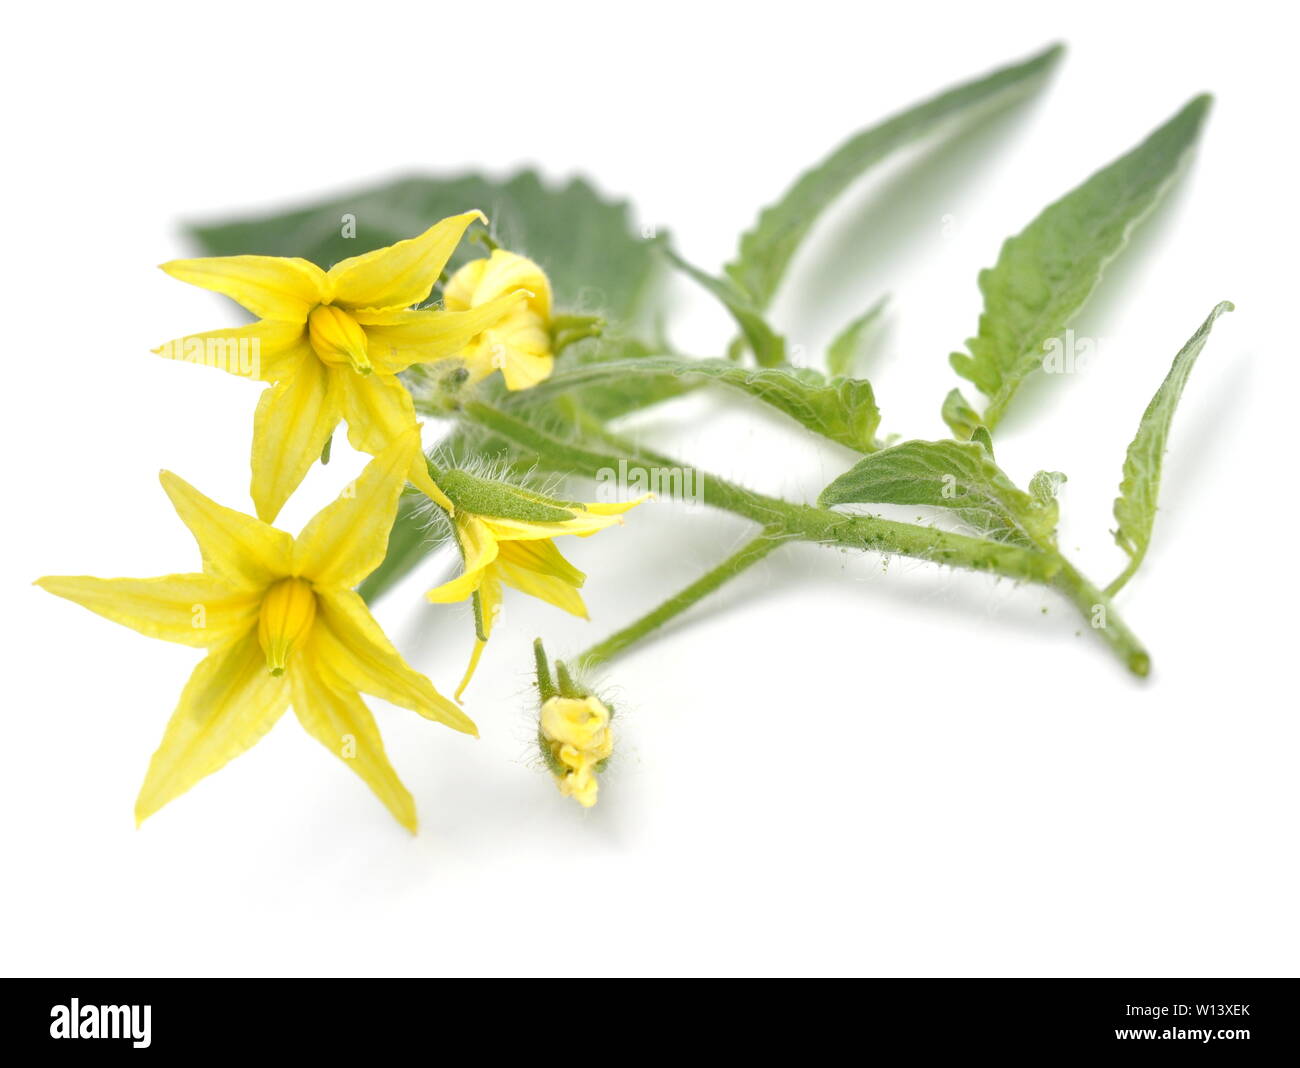 Yellow flower of a tomato plant on white background Stock Photo